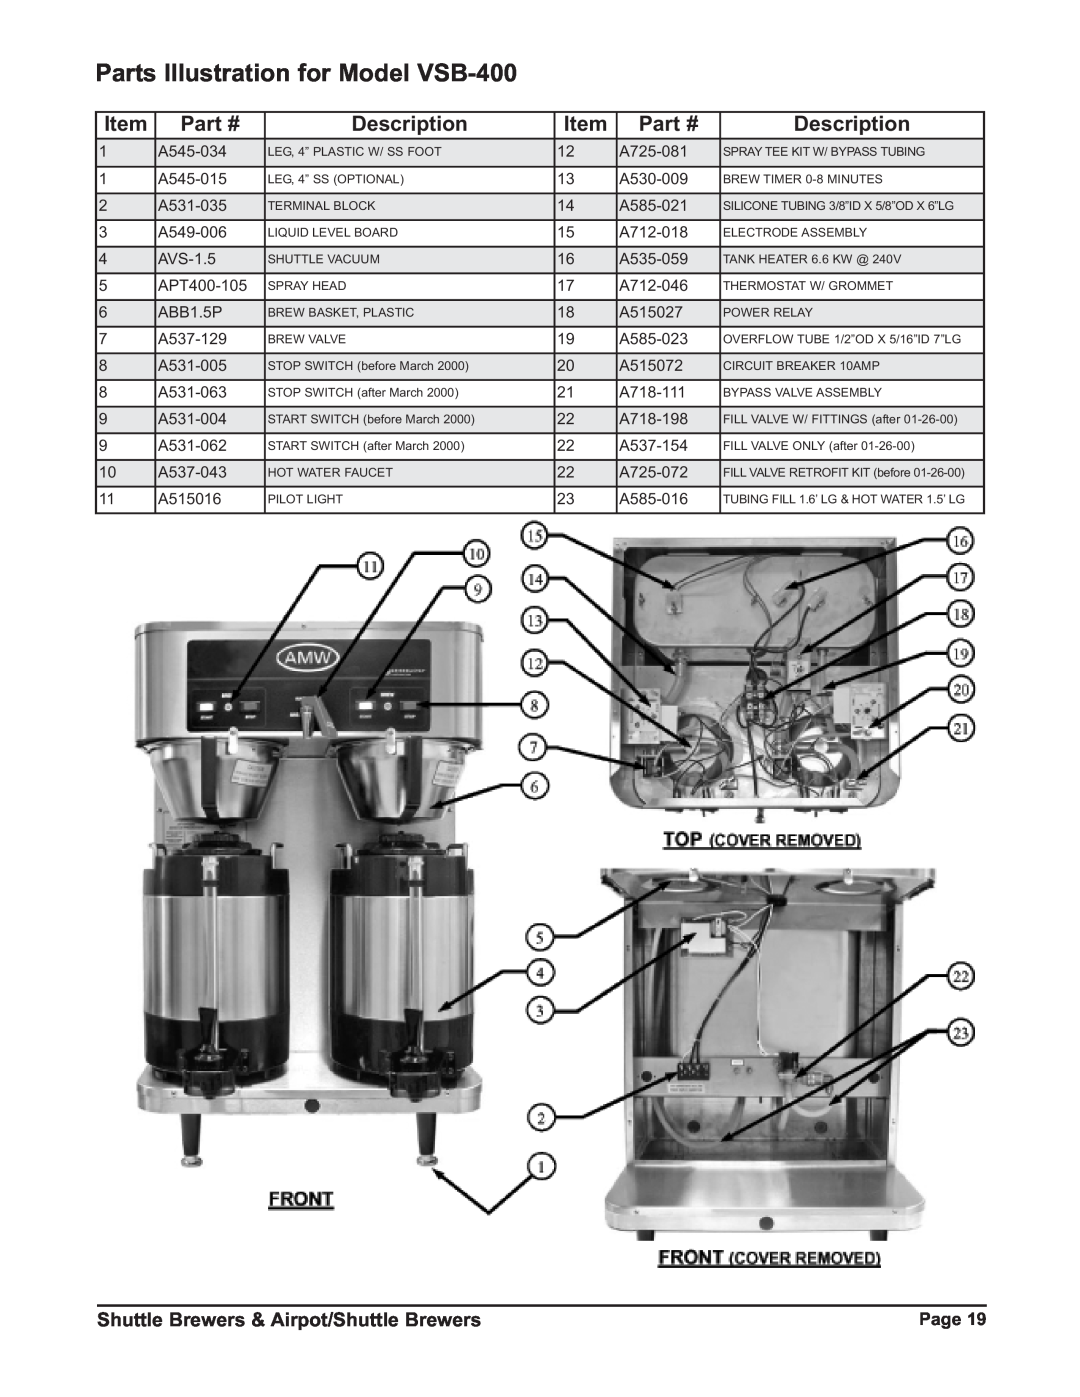 Grindmaster P400ESHP Parts Illustration for Model VSB-400, Description, Shuttle Brewers & Airpot/Shuttle Brewers, Page 